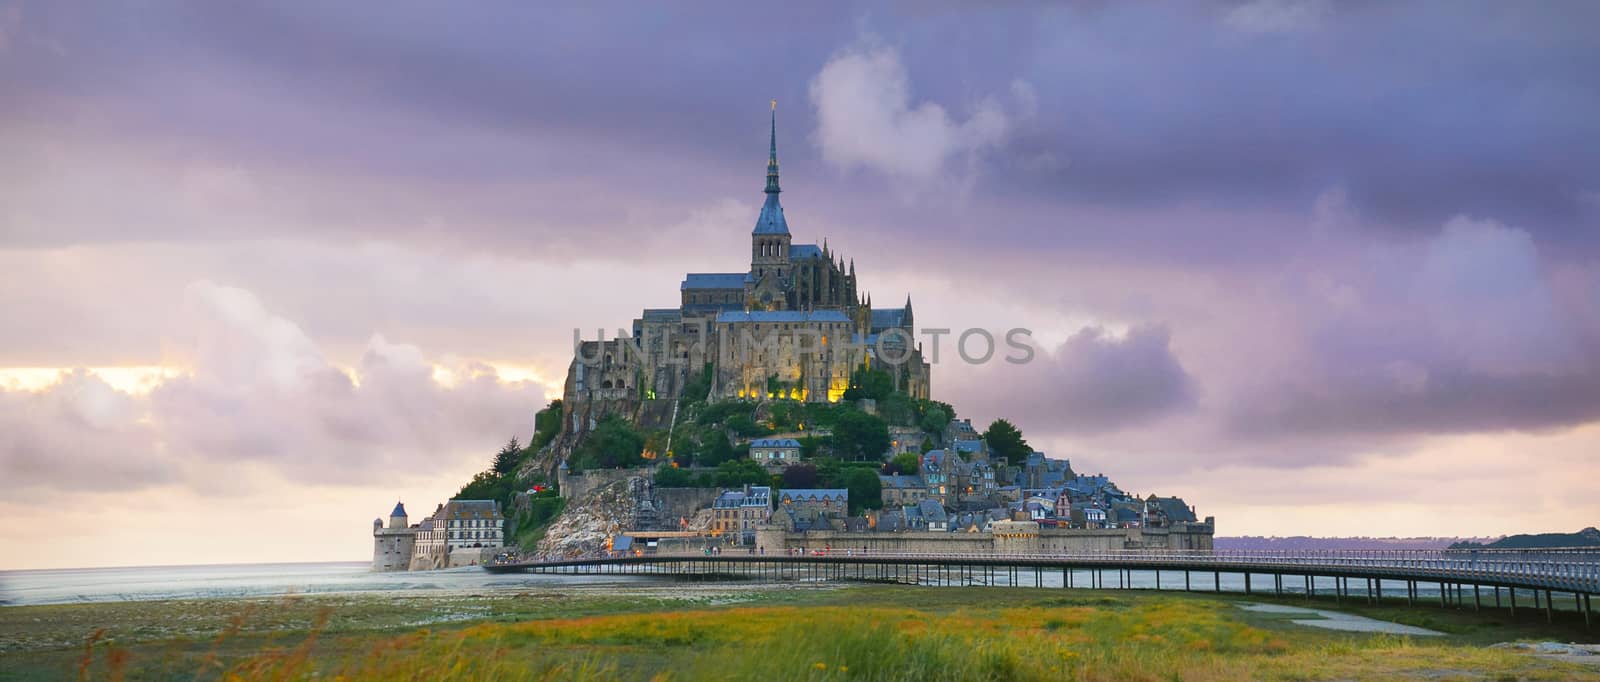 Mont Saint Michel in the evening, France by Lazarenko